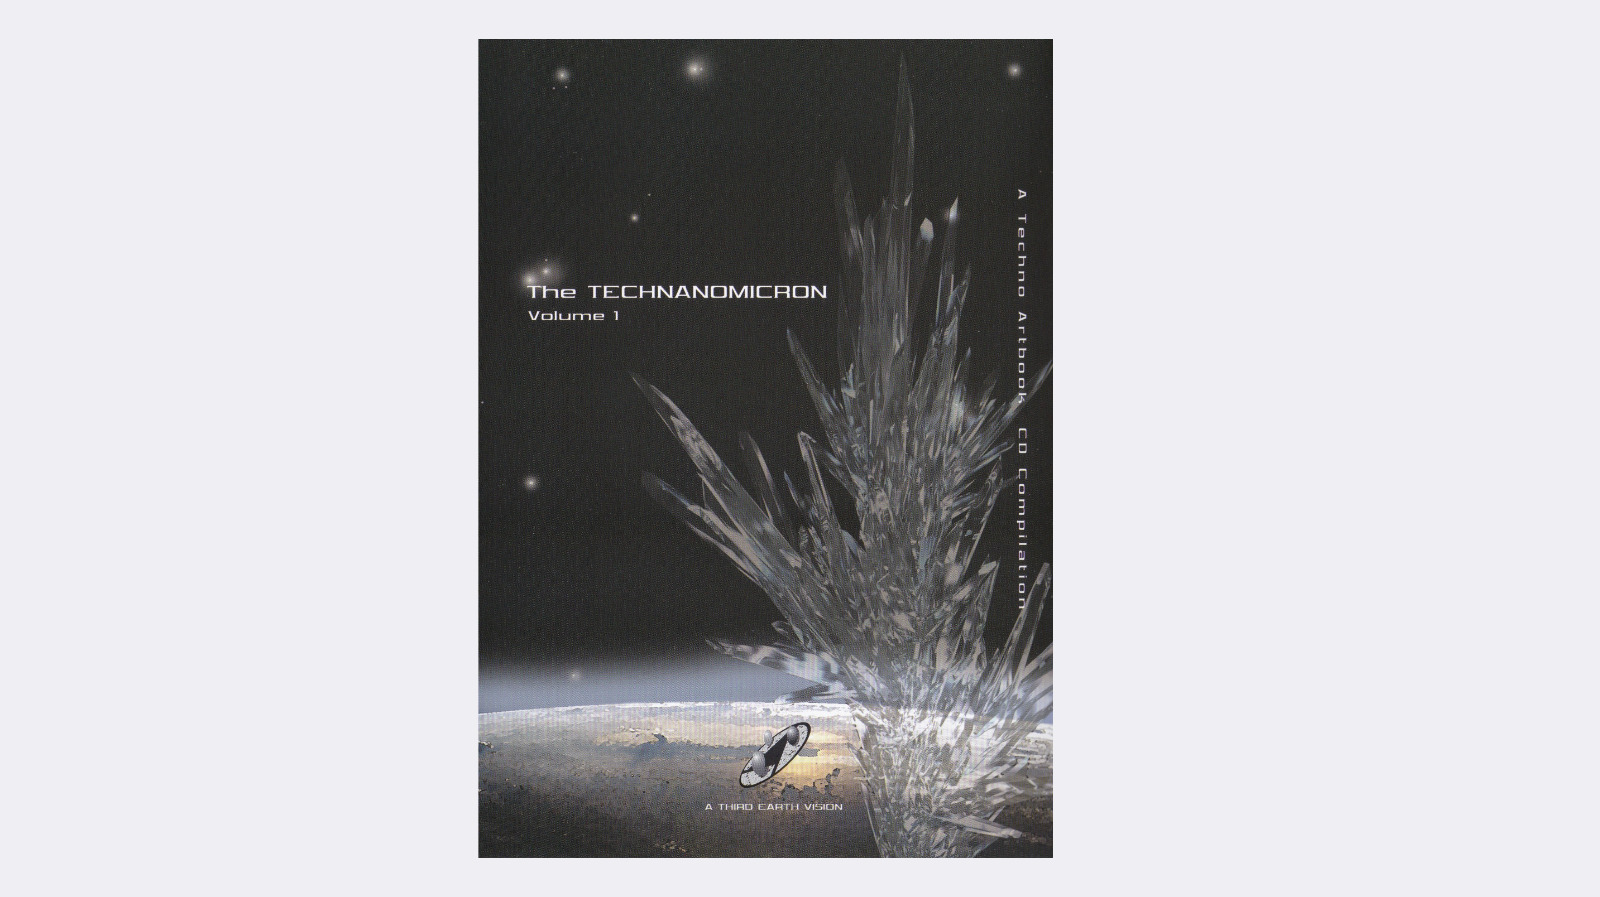 The Technanomicron (English Version) CD/Artbook